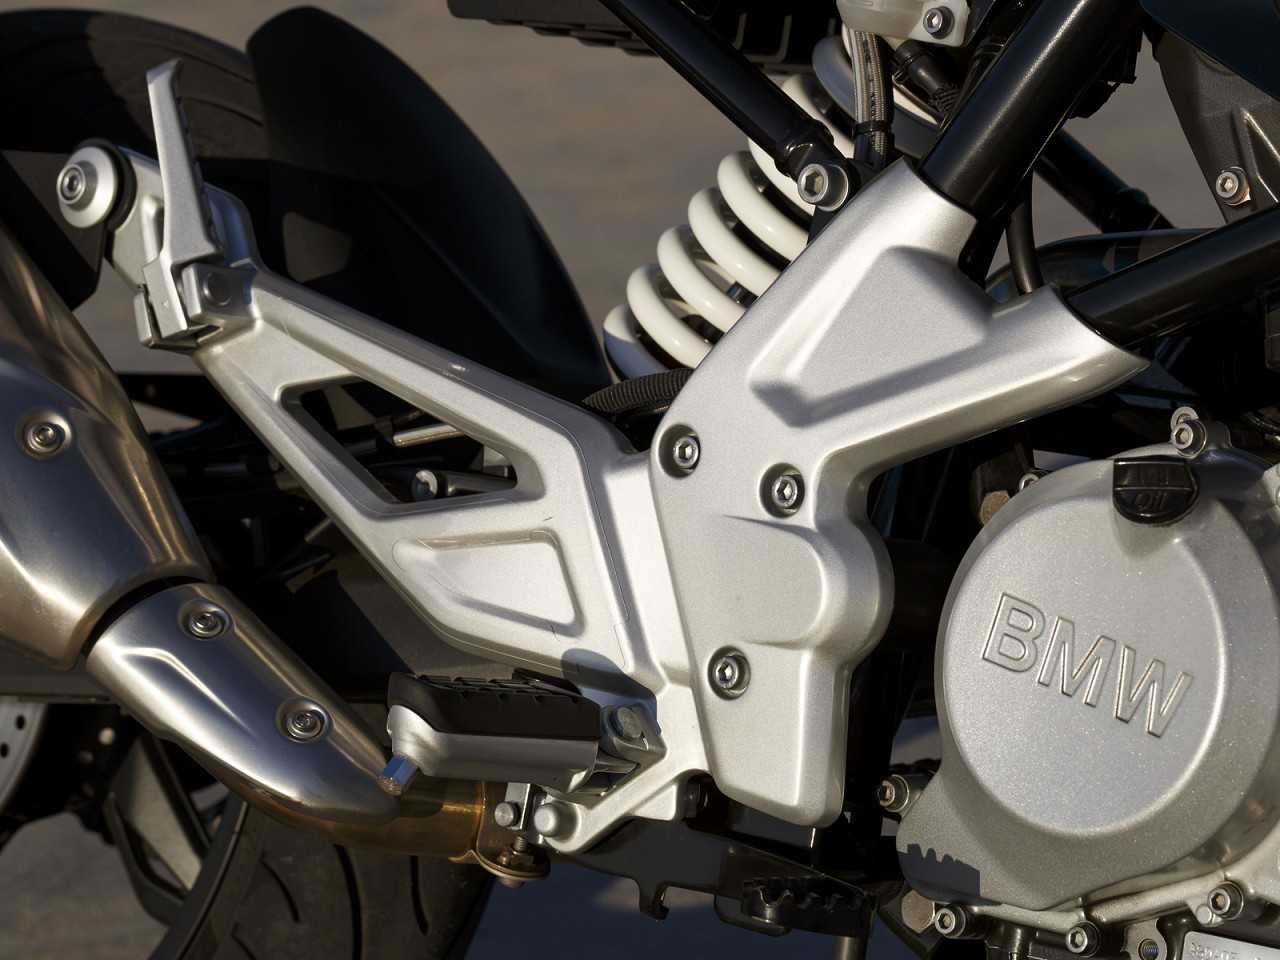 BMWG 310 R 2018 - acelerador